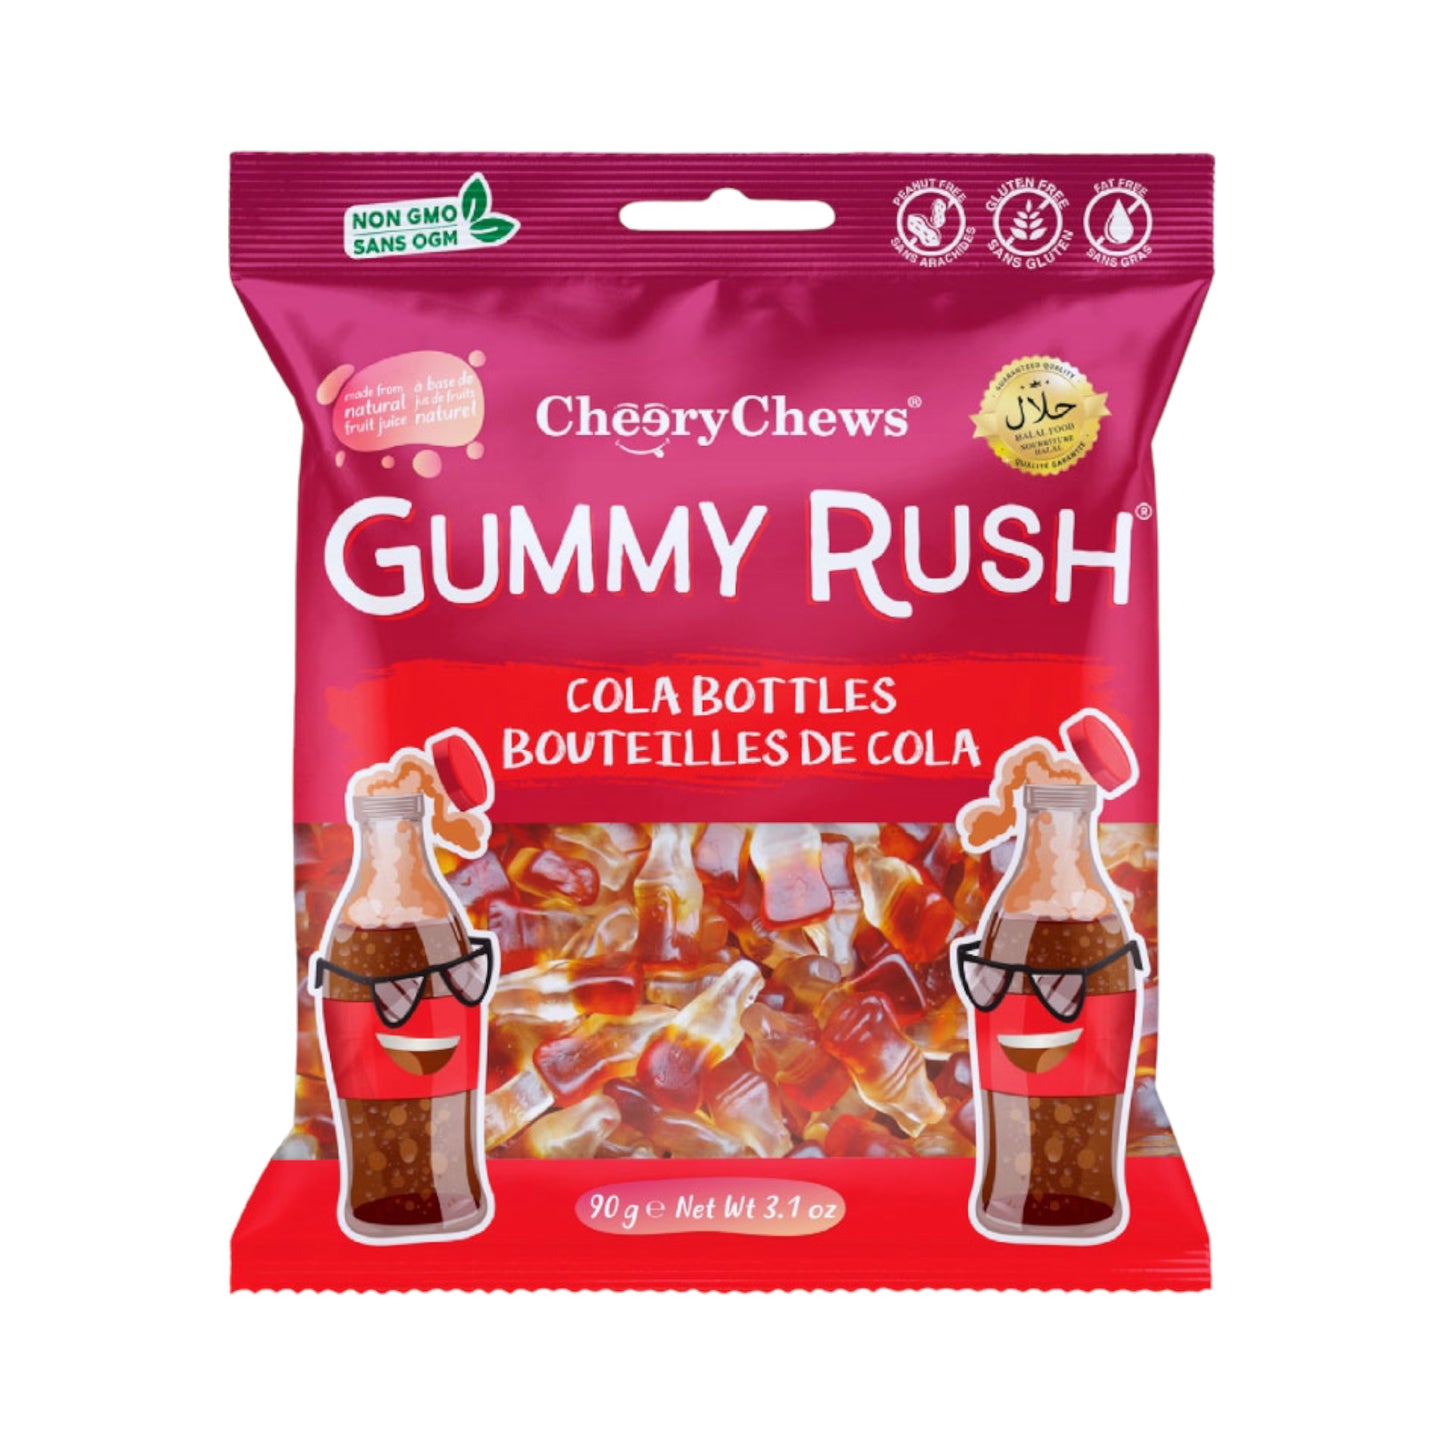 Gummy Rush Cola Bottles - 3.1oz (90g)